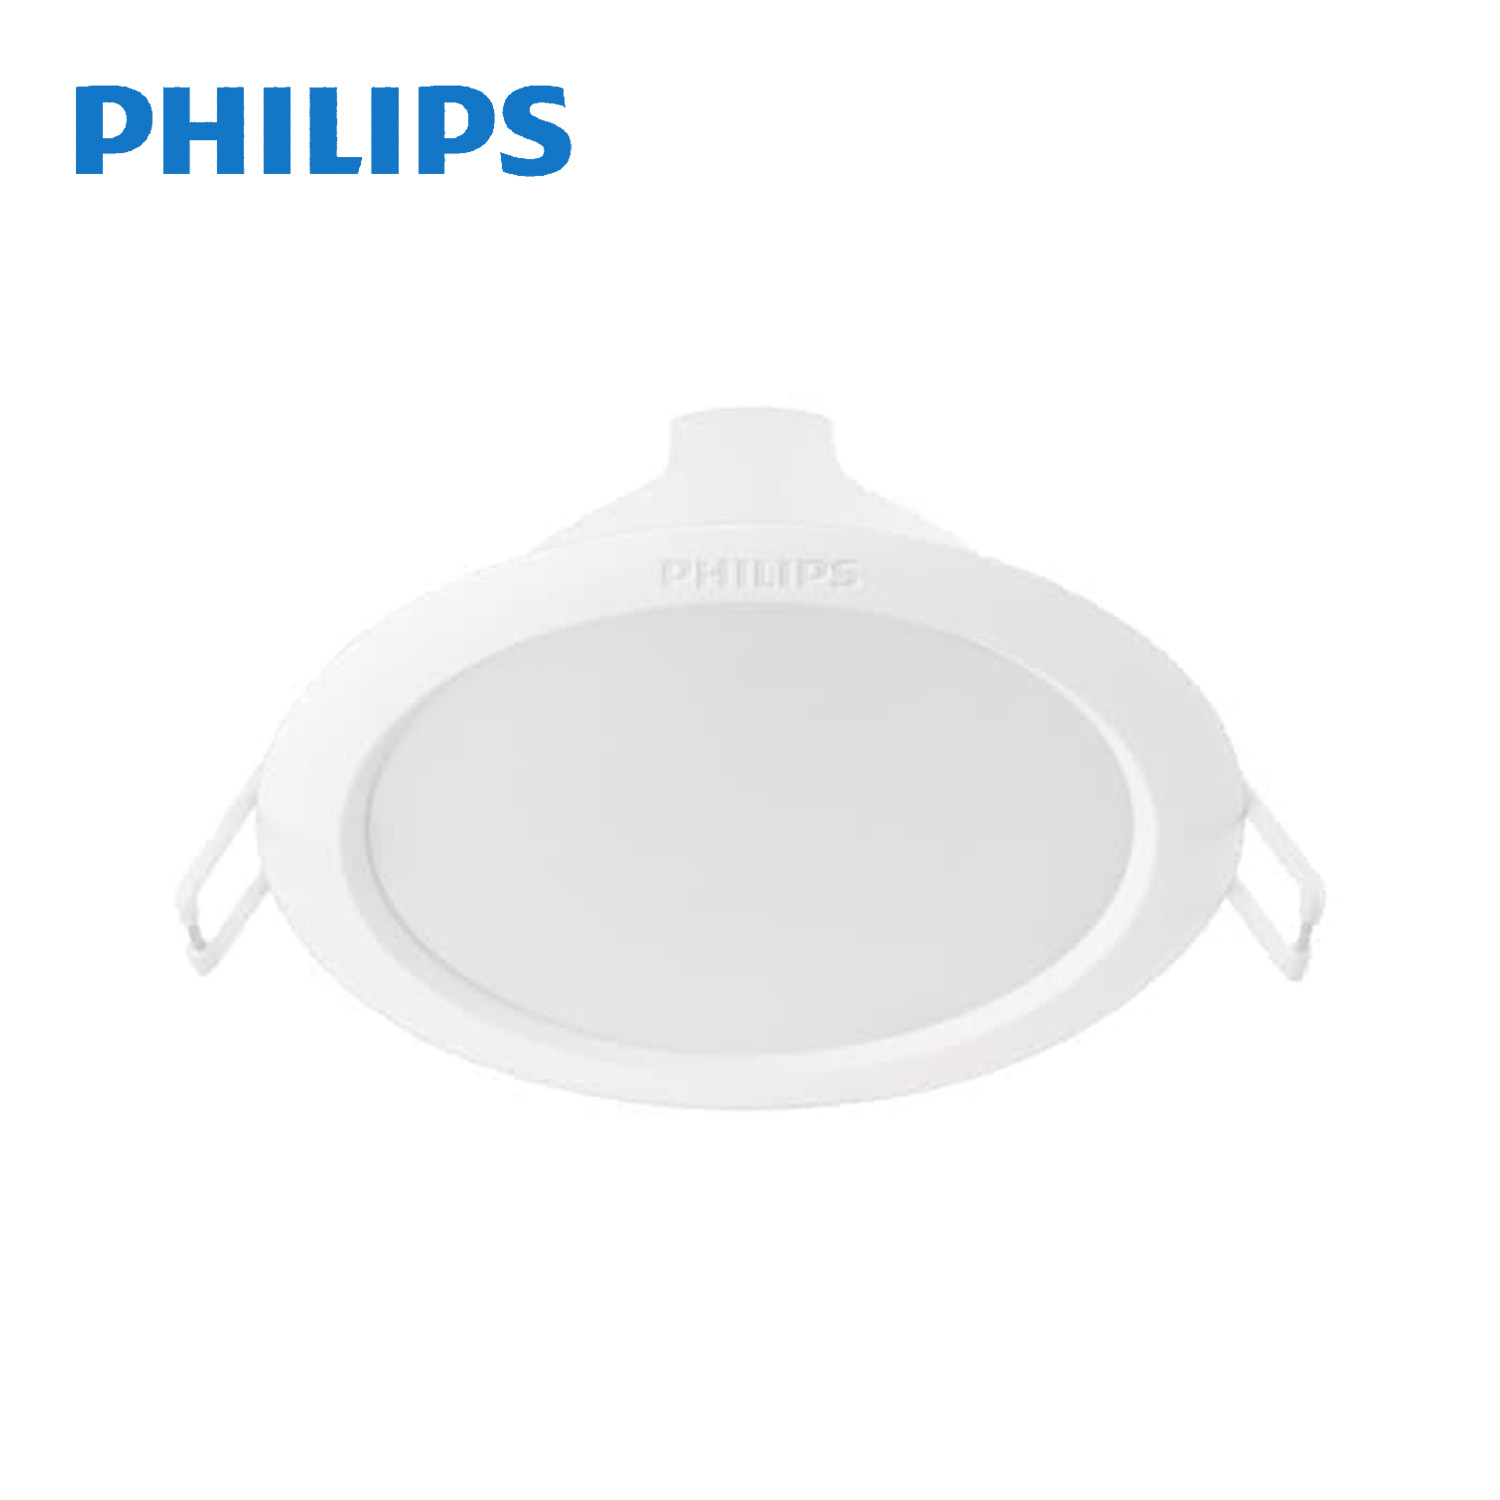 Philips 59264 Eridani 175 12W  30K ID Recessed - Lampu Led